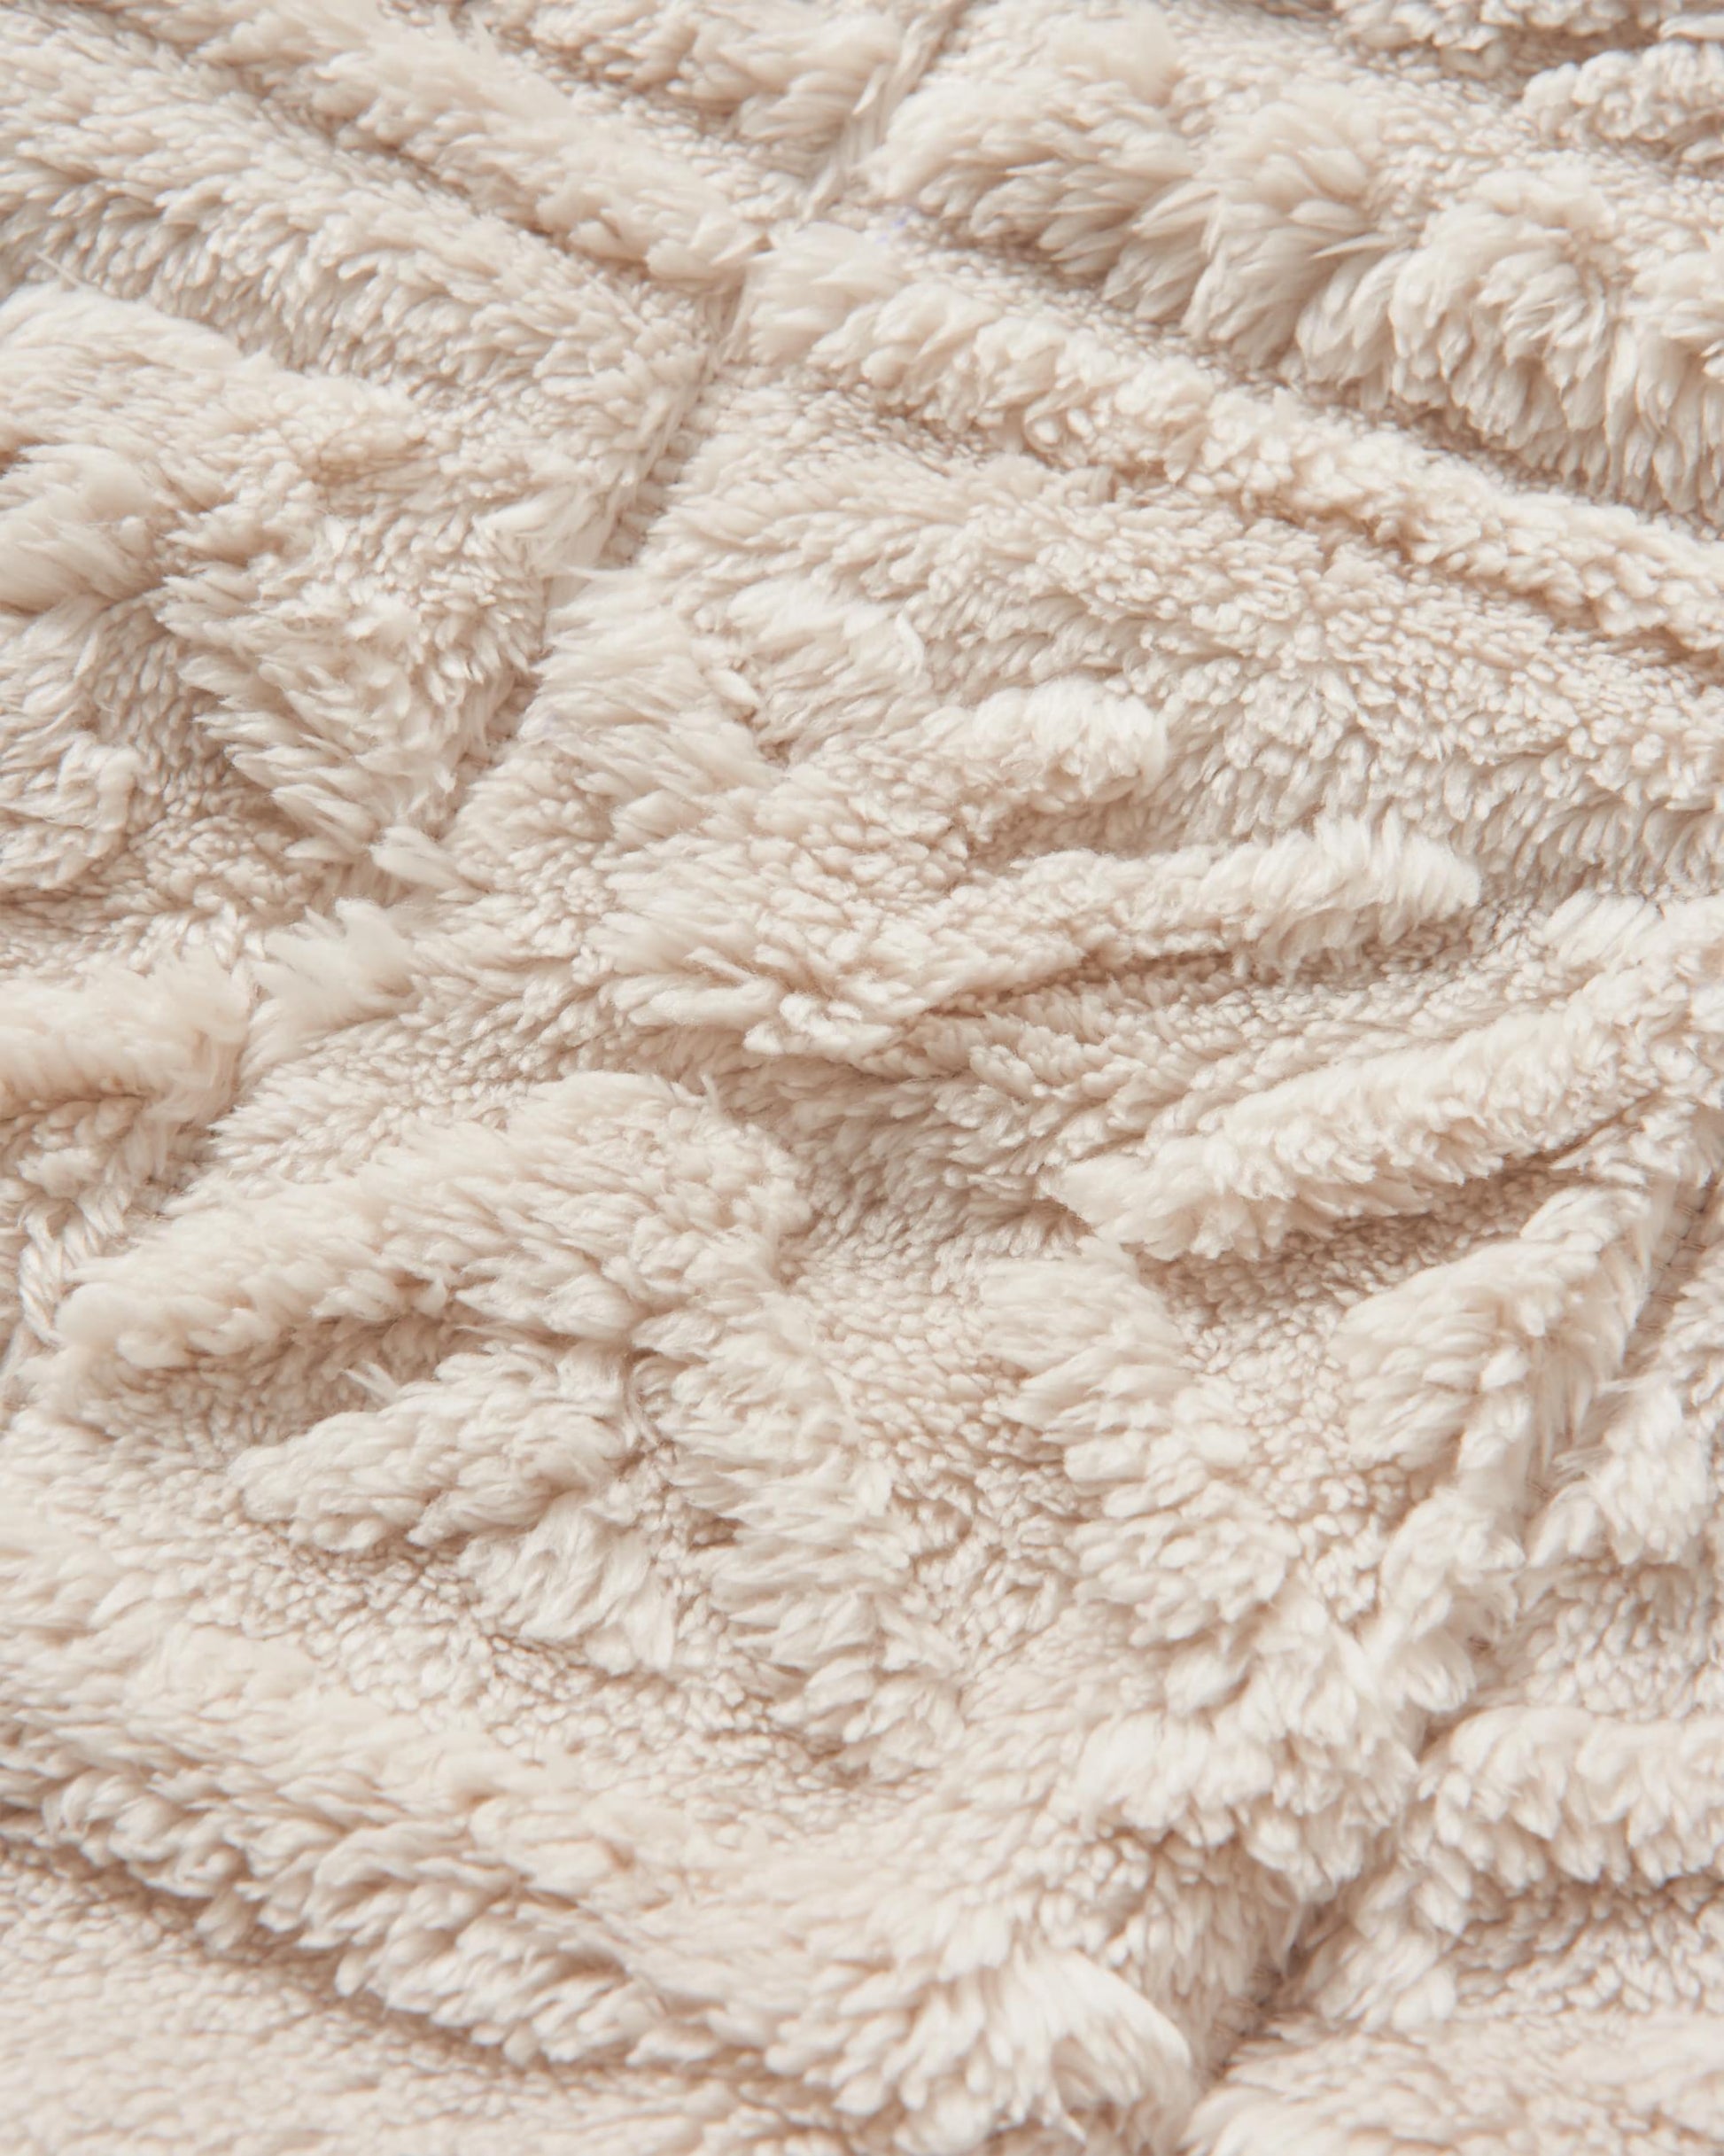 Holistic Sherpa Hooded Fleece - Vintage White